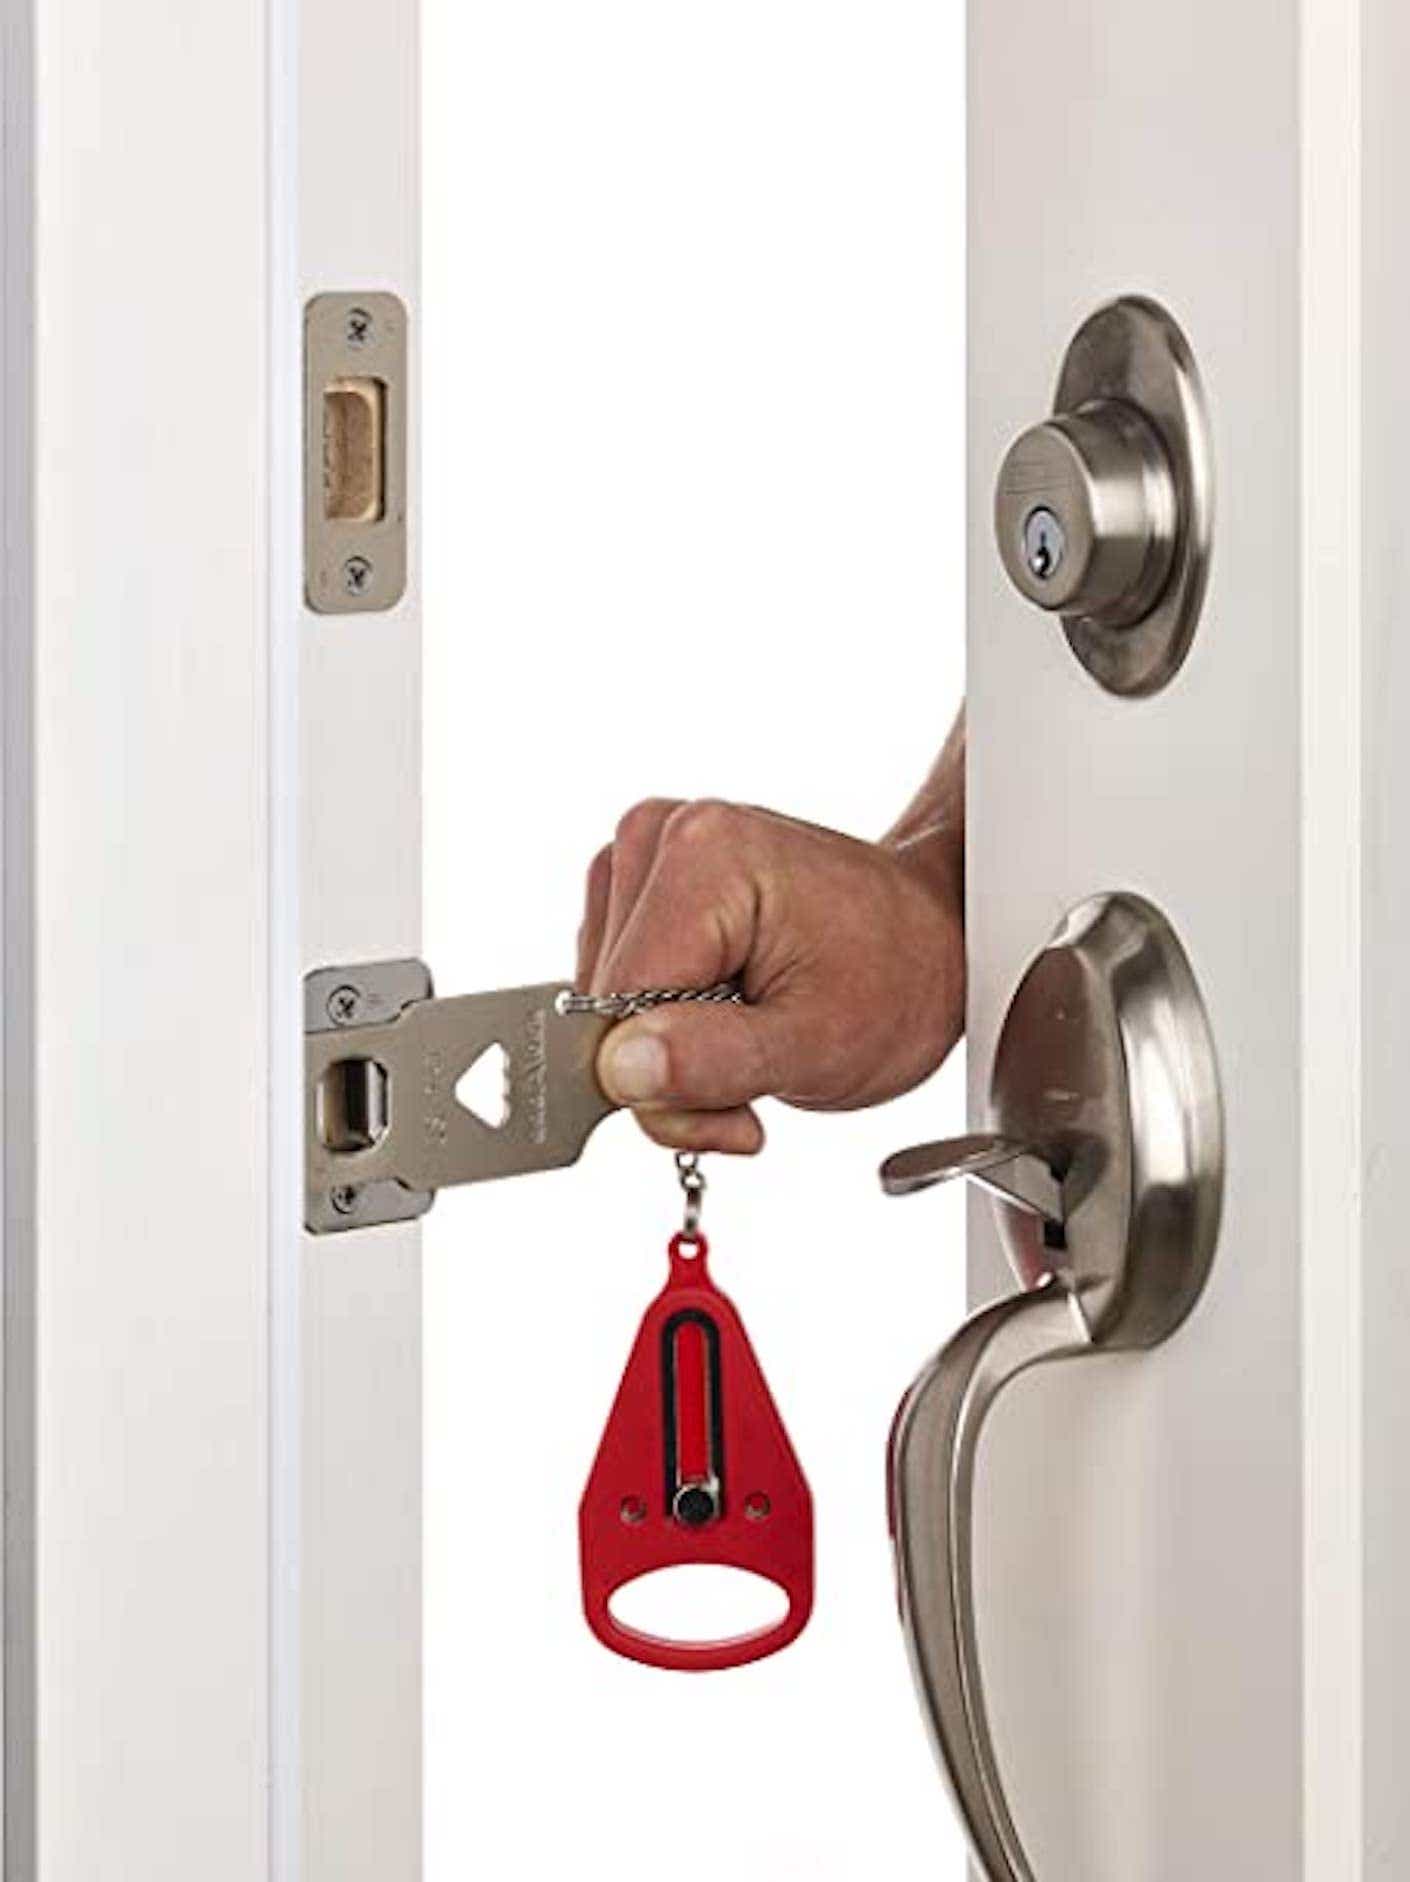 A hand inserts a simple, flat, metal door lock into the side of a door near the doorknob.